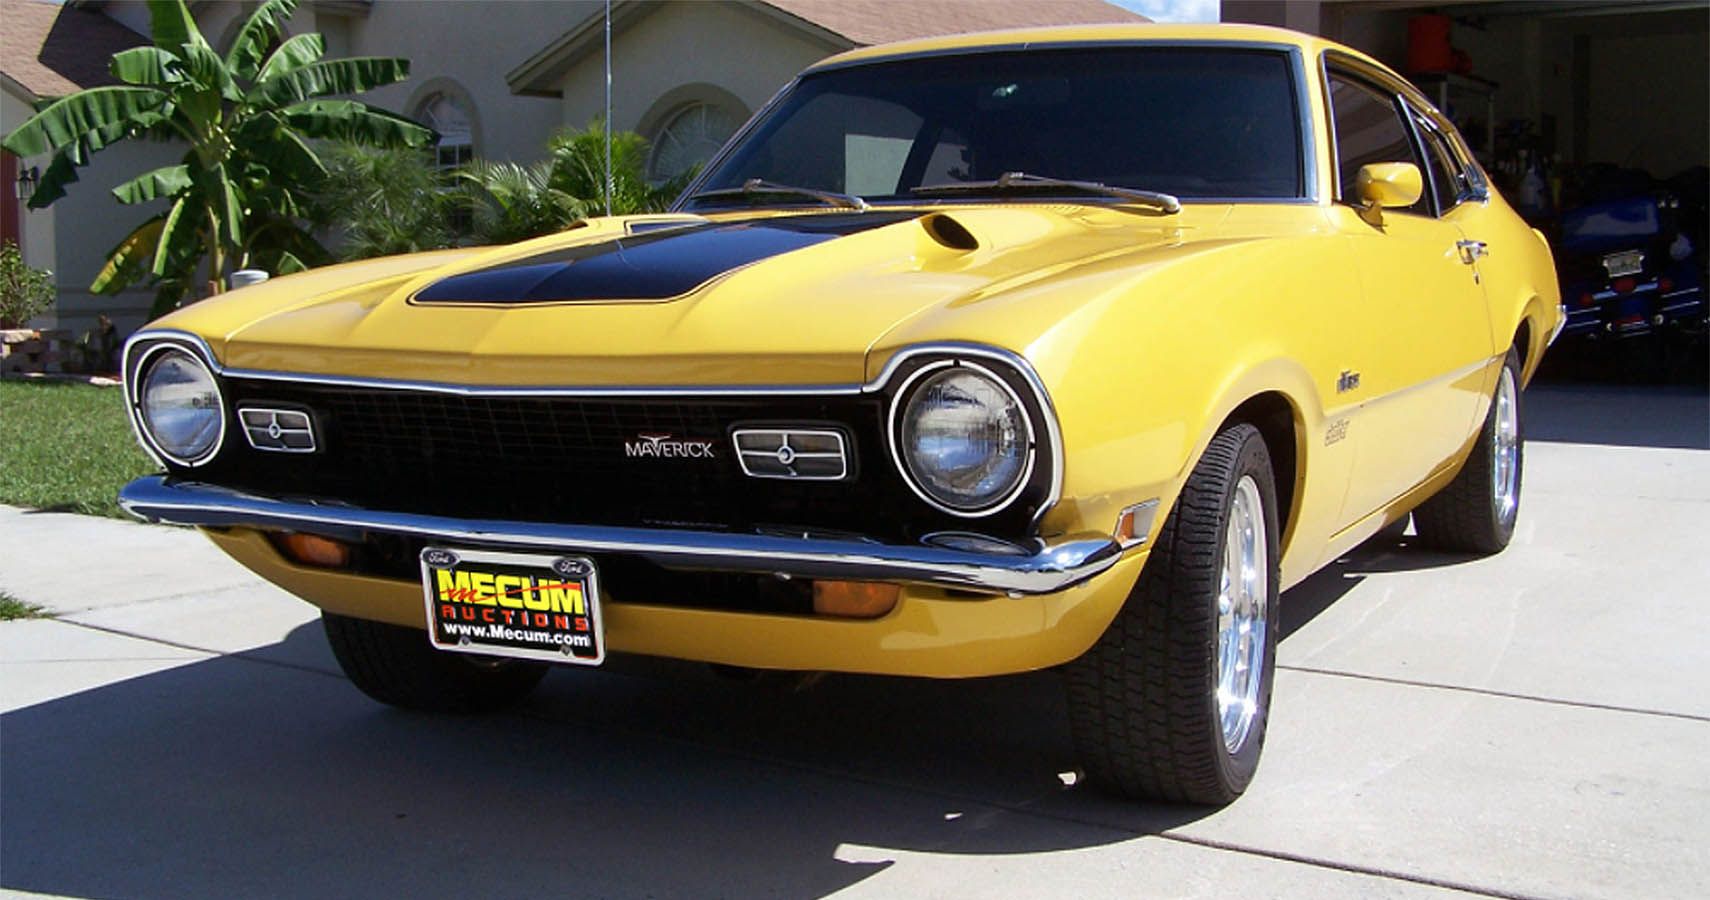 1971 Ford Maverick yellow